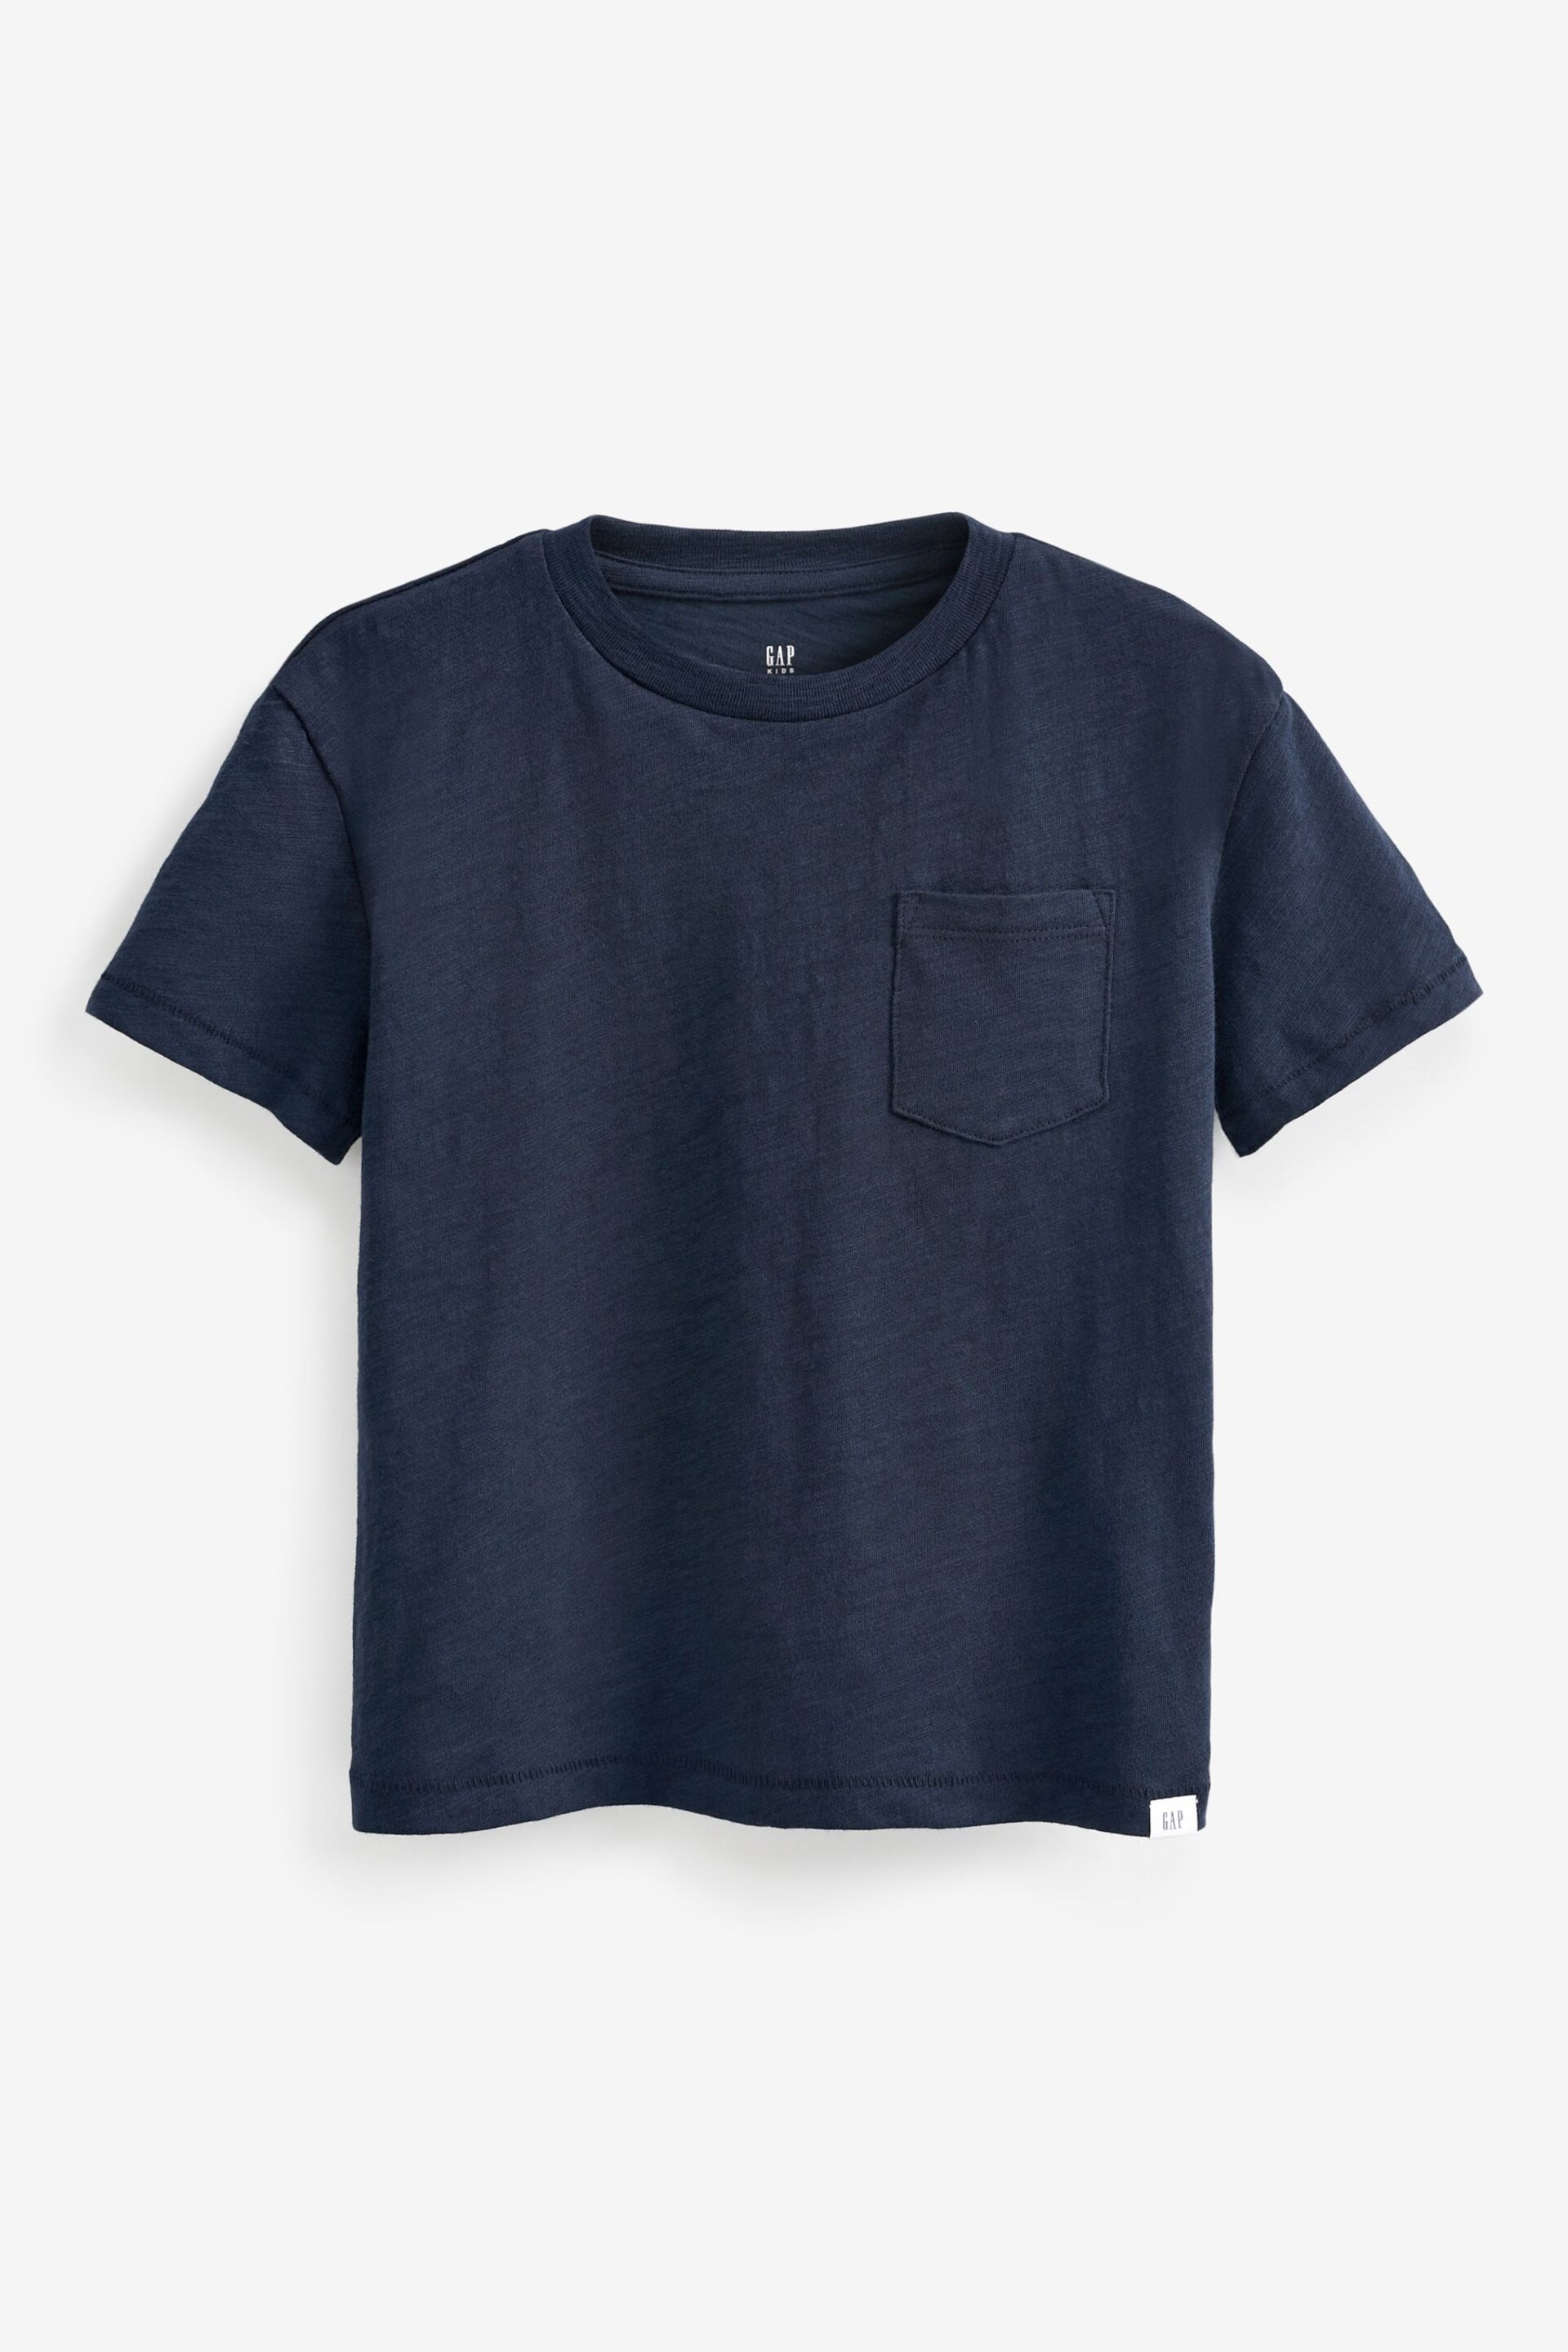 Gap Navy Blue Pocket Short Sleeve Crew Neck T-Shirt (4-13yrs) - Image 1 of 3